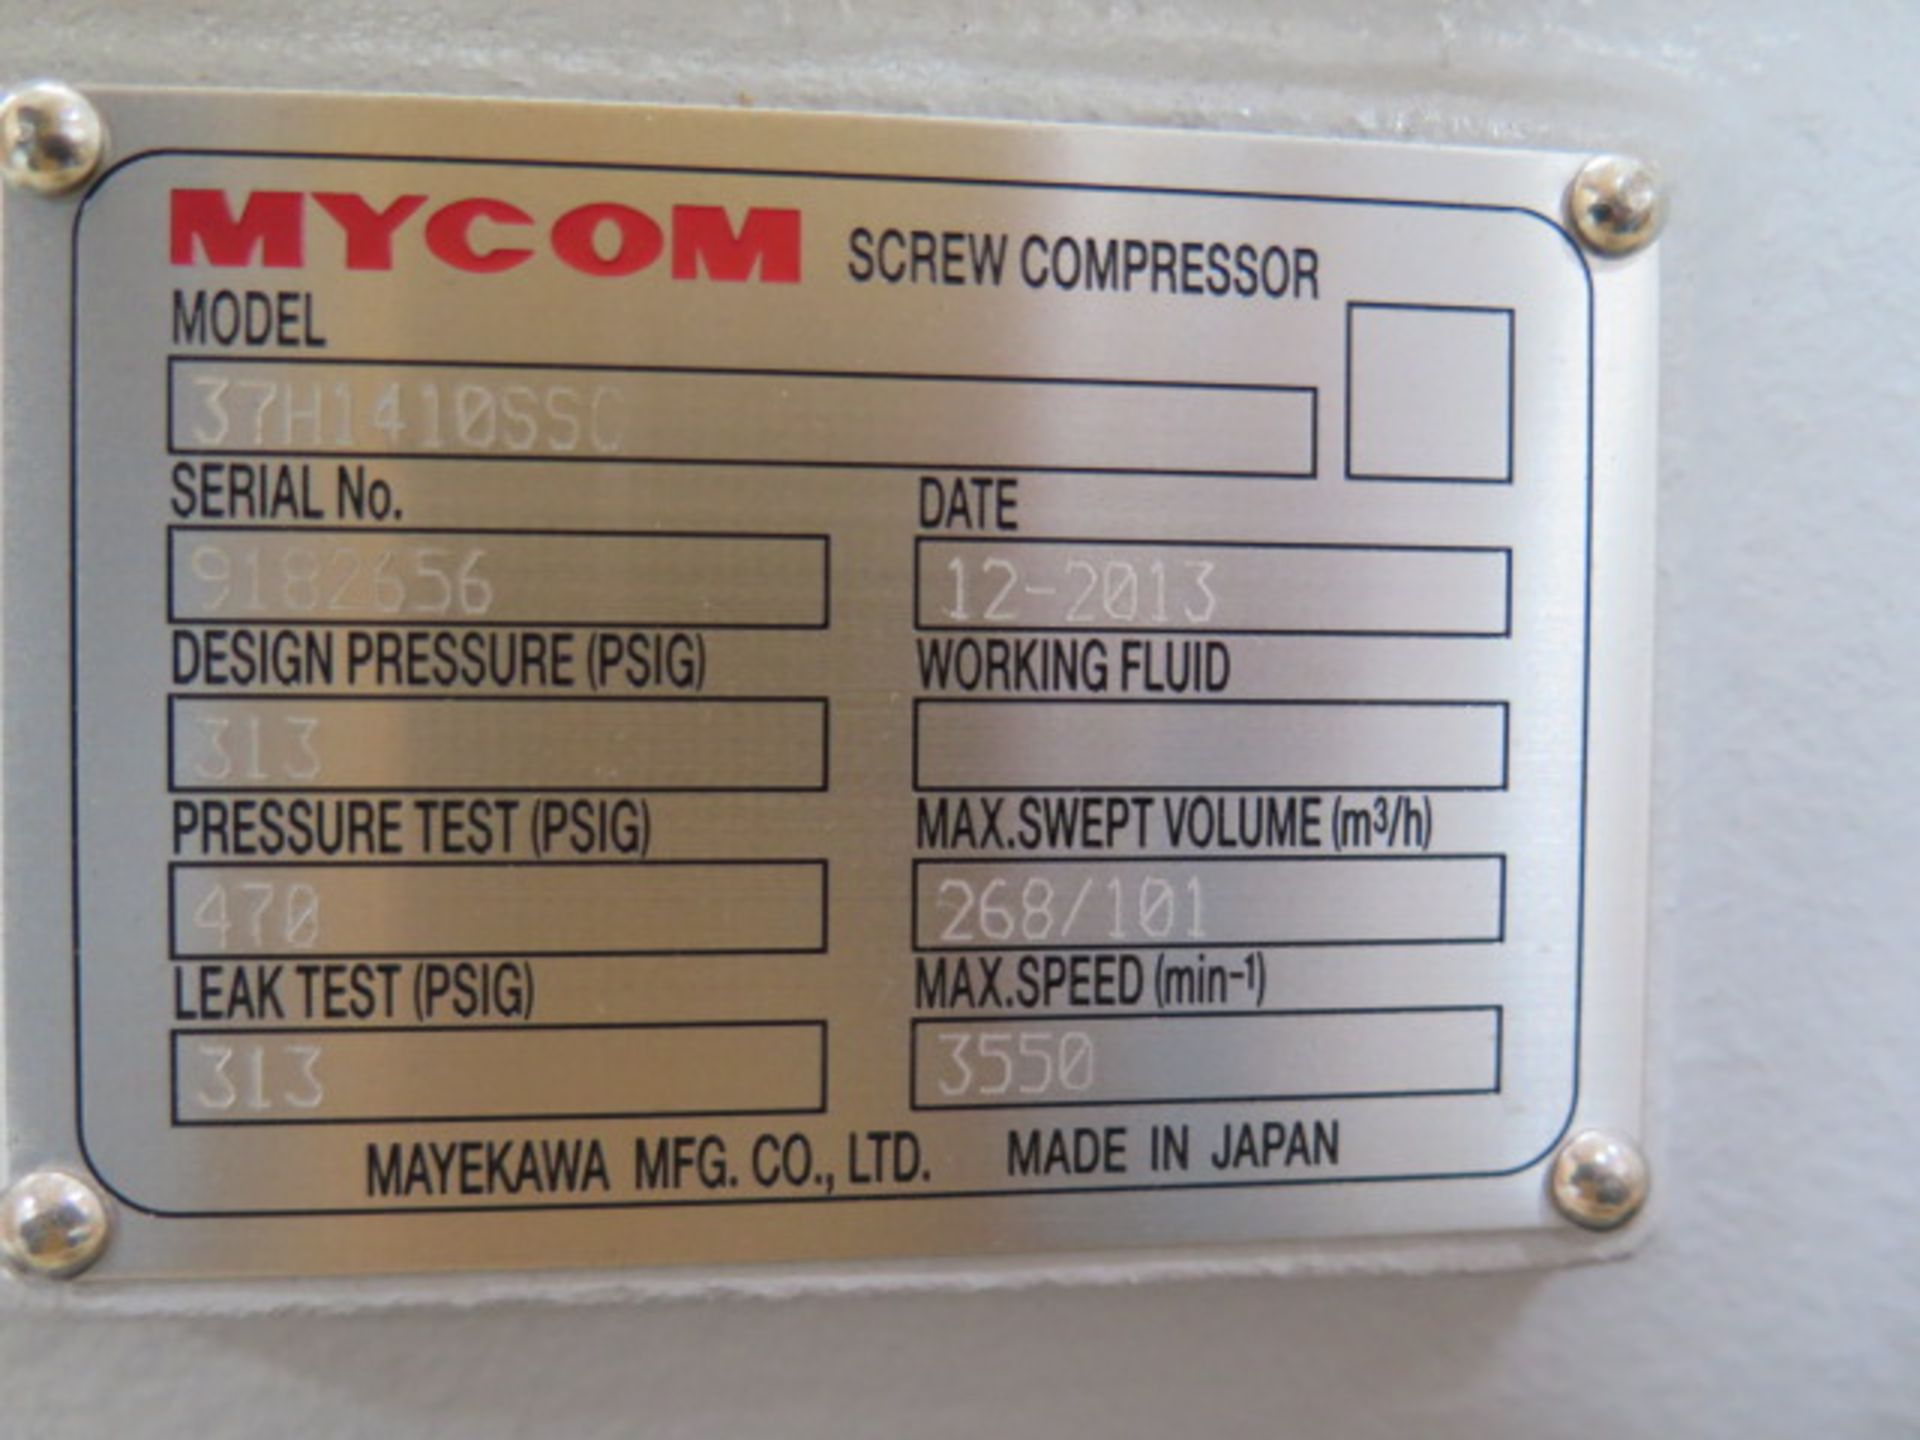 Mayekawa Mycom mdl. 37H1410SSC Screw Compressor 480V (SOLD AS-IS - NO WARRANTY) - Image 6 of 6